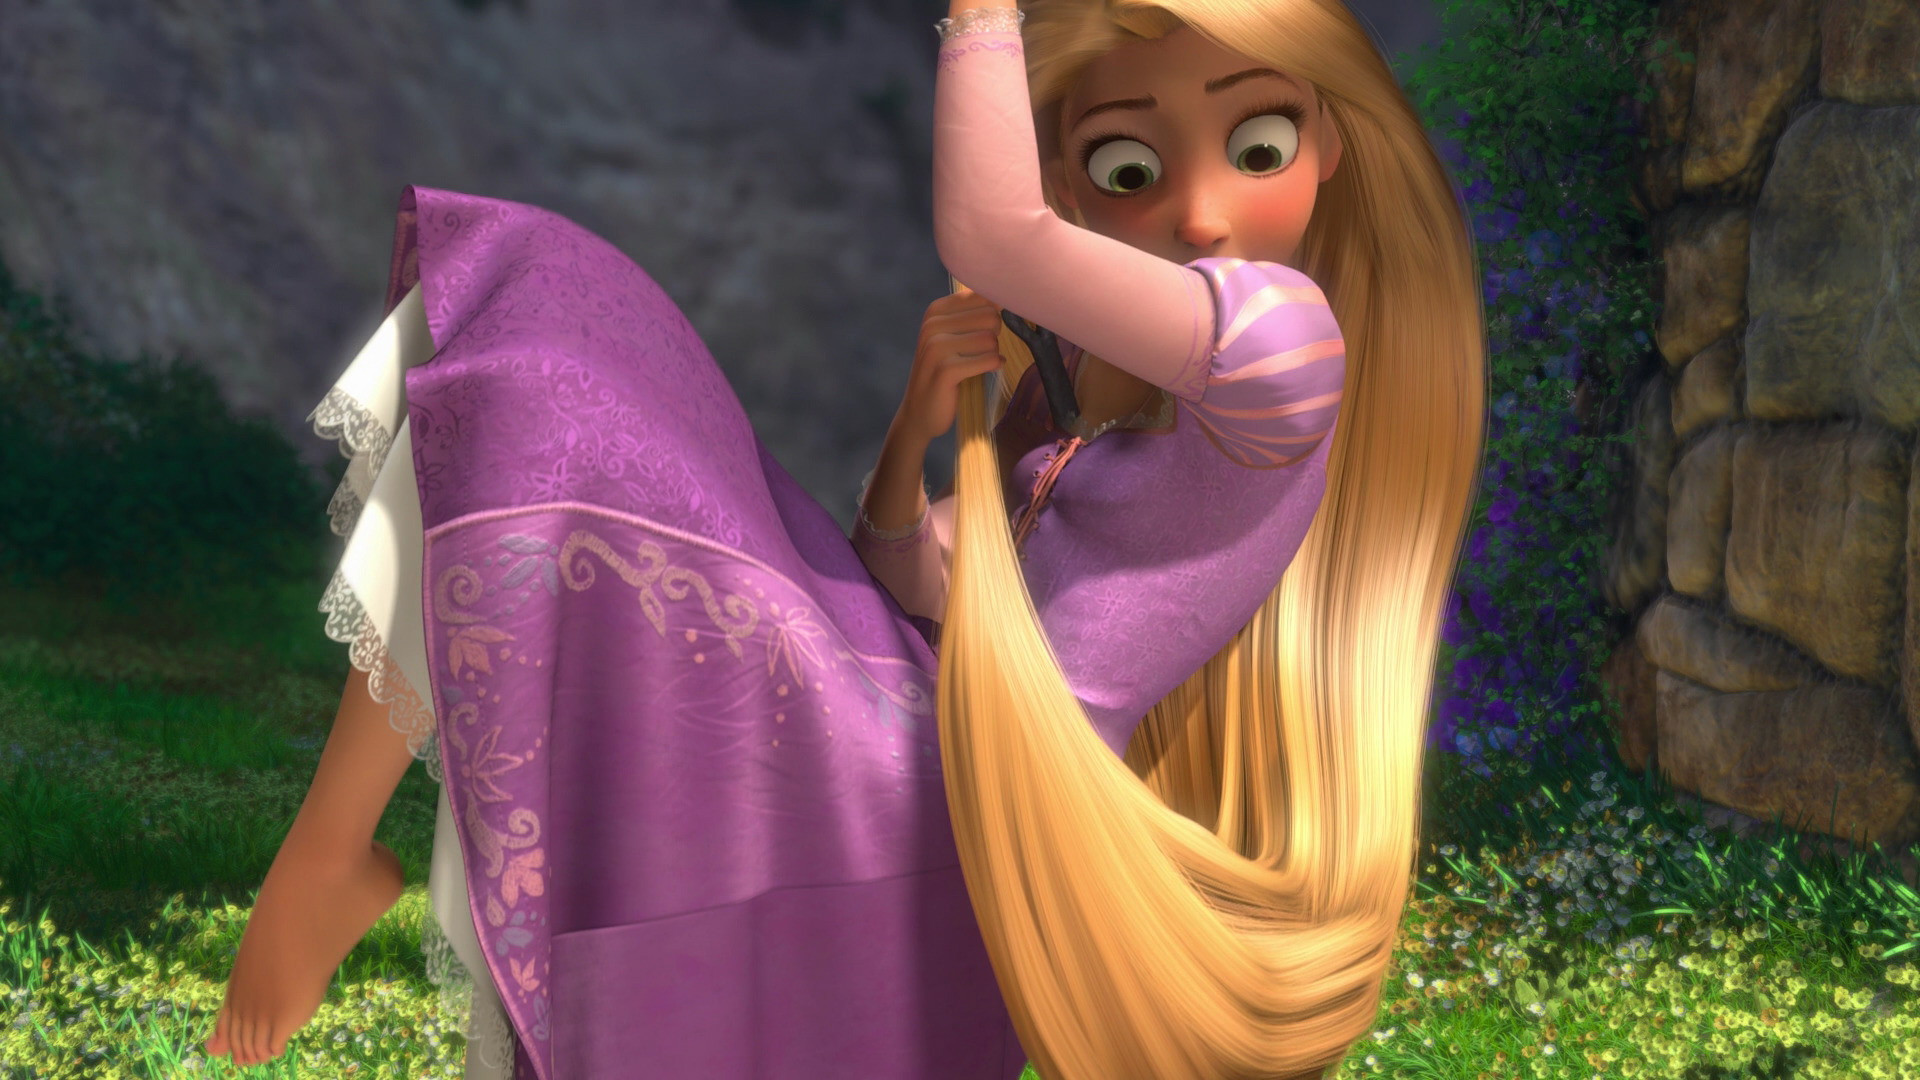 1920x1080 Rapunzel of Disney Princesses images Rapunzel - My Life Begin HD wallpaper  and background photos